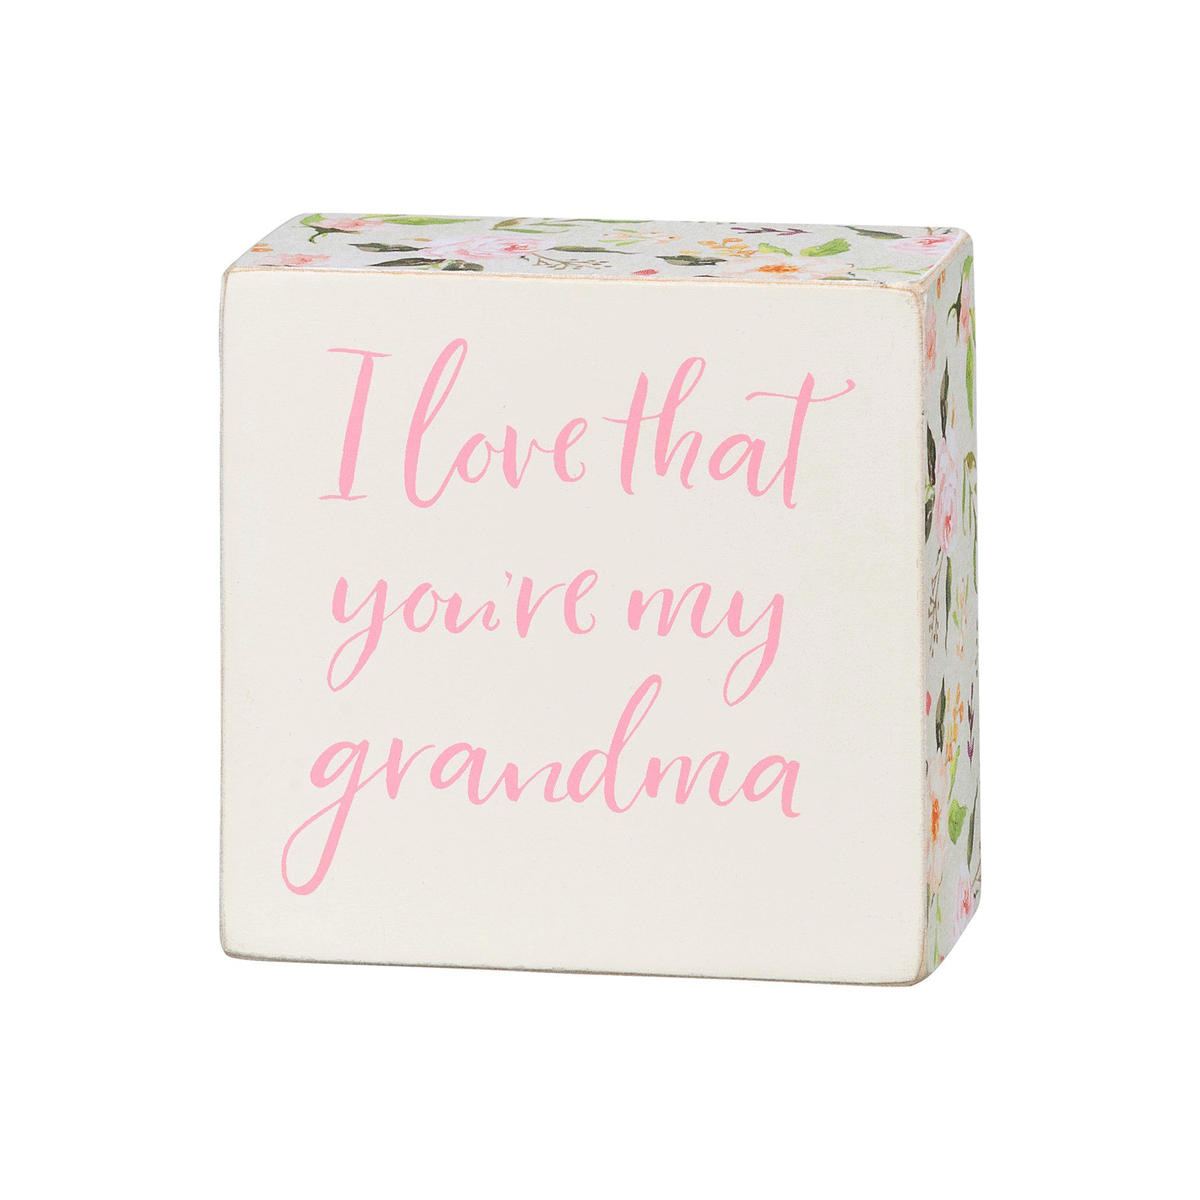 Grandma Floral Box Sign - Signs & More